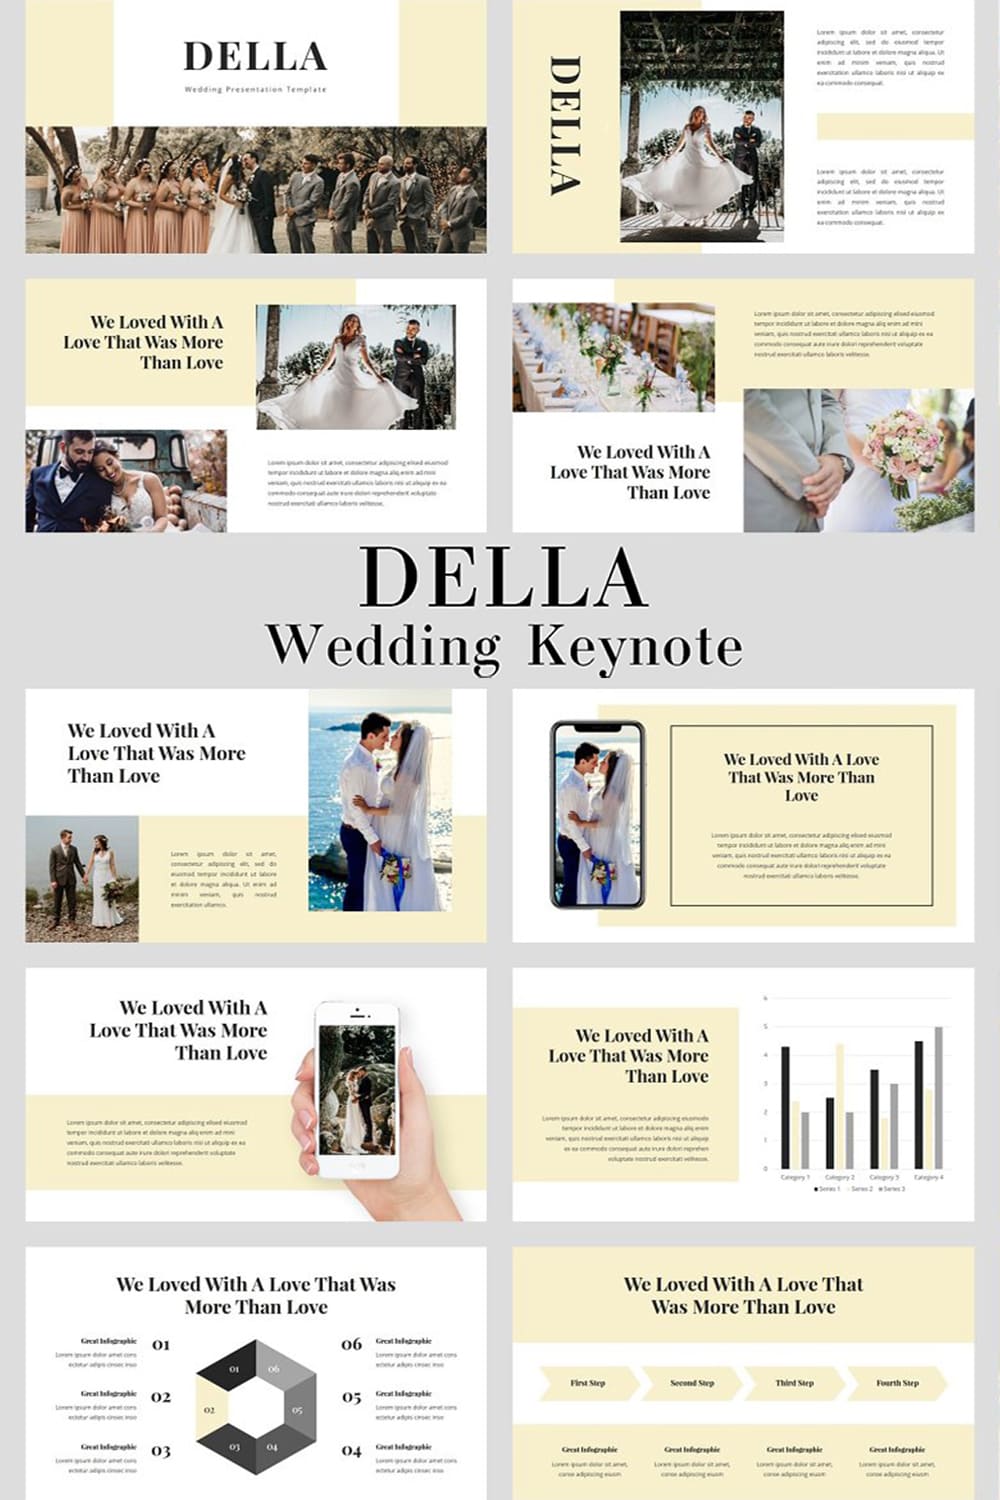 Pinterest - Della - Wedding Keynote.